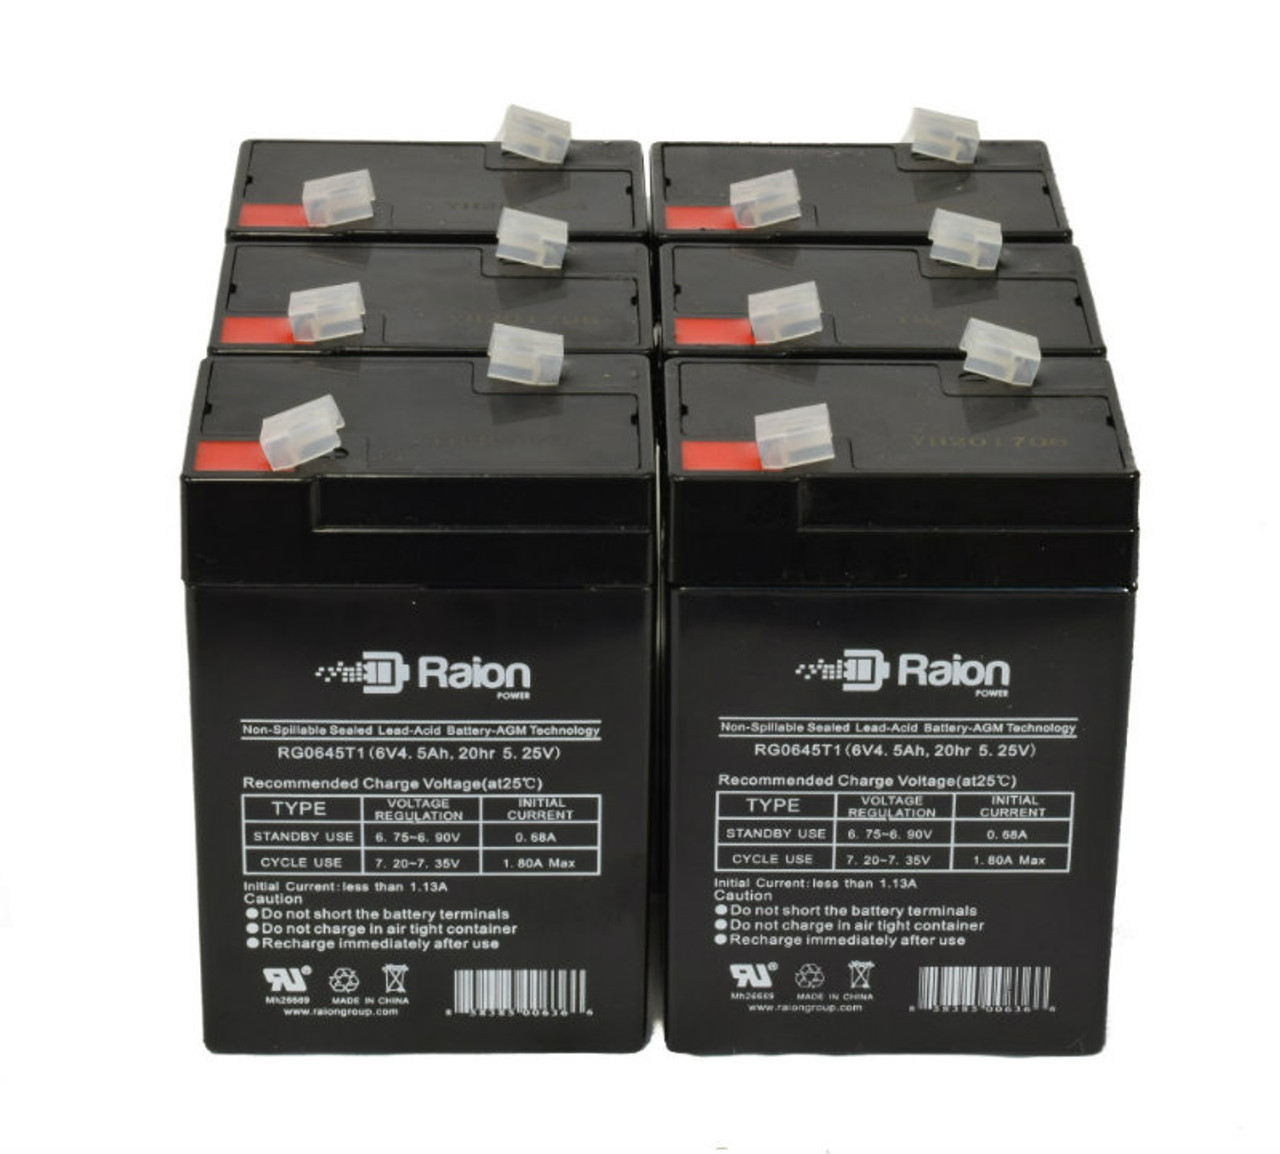 Raion Power 6V 4.5Ah Replacement Emergency Light Battery for Sure-Lites / Cooper Lighting SL-26-78 - 6 Pack